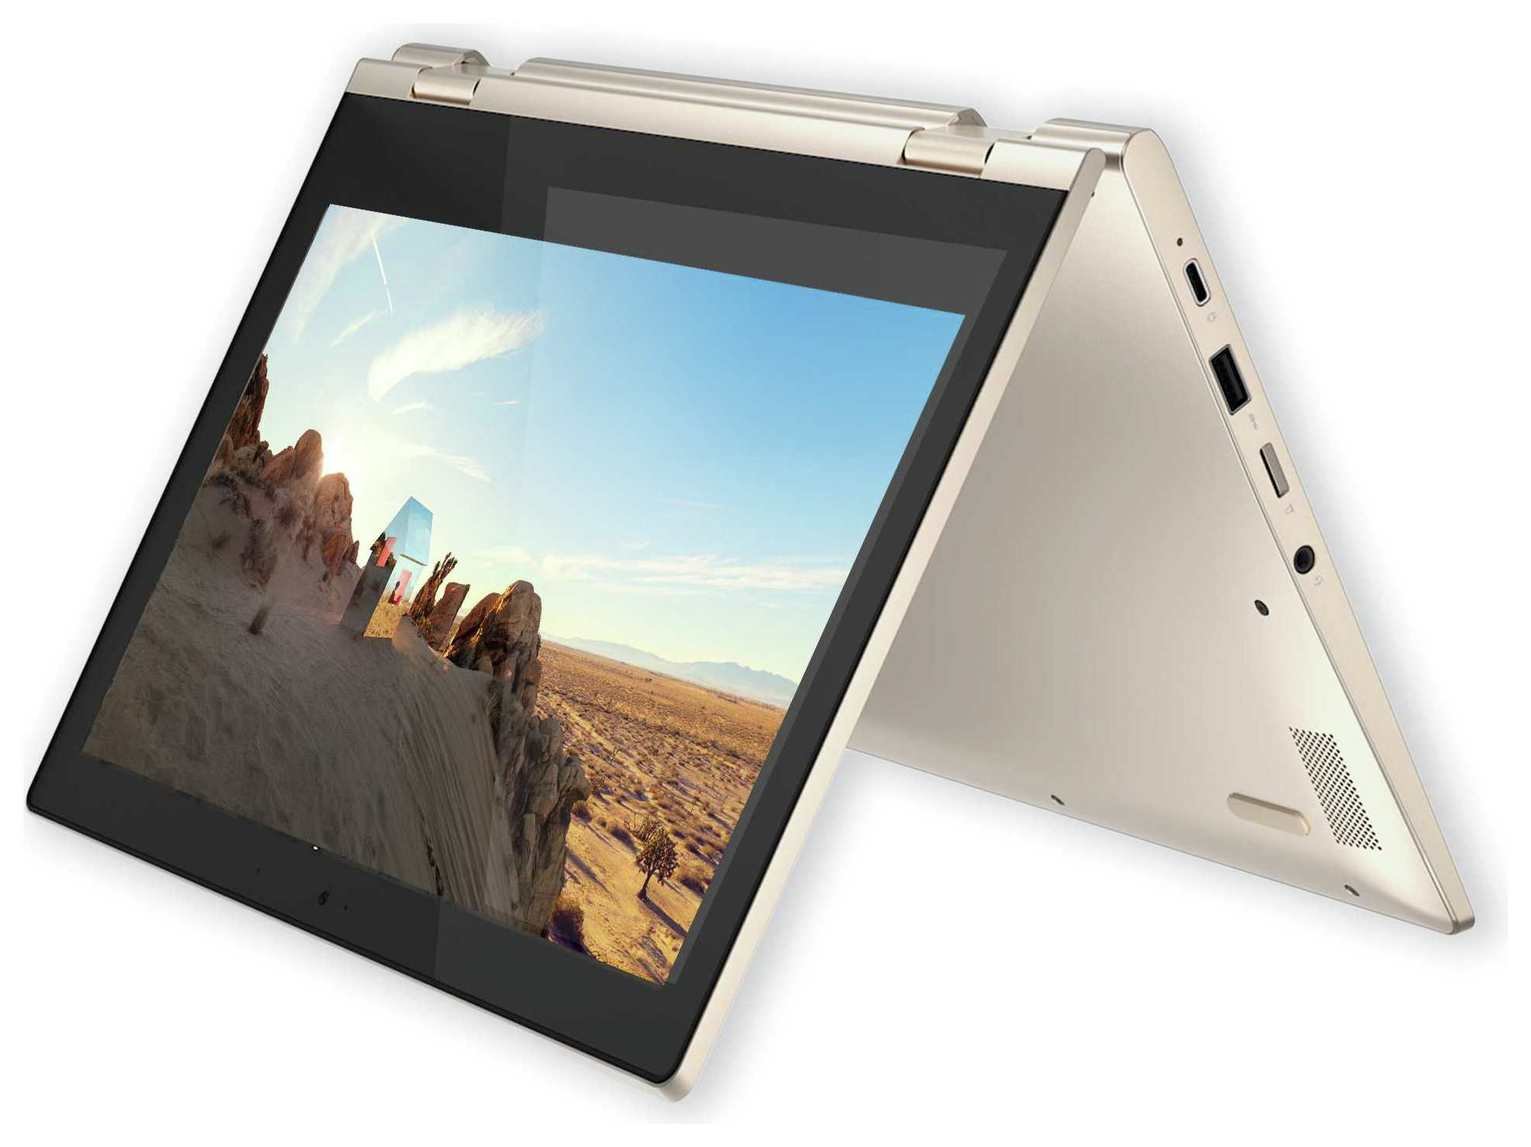 Lenovo IdeaPad Flex 3 11.6in Celeron 4GB 32GB Chromebook Review